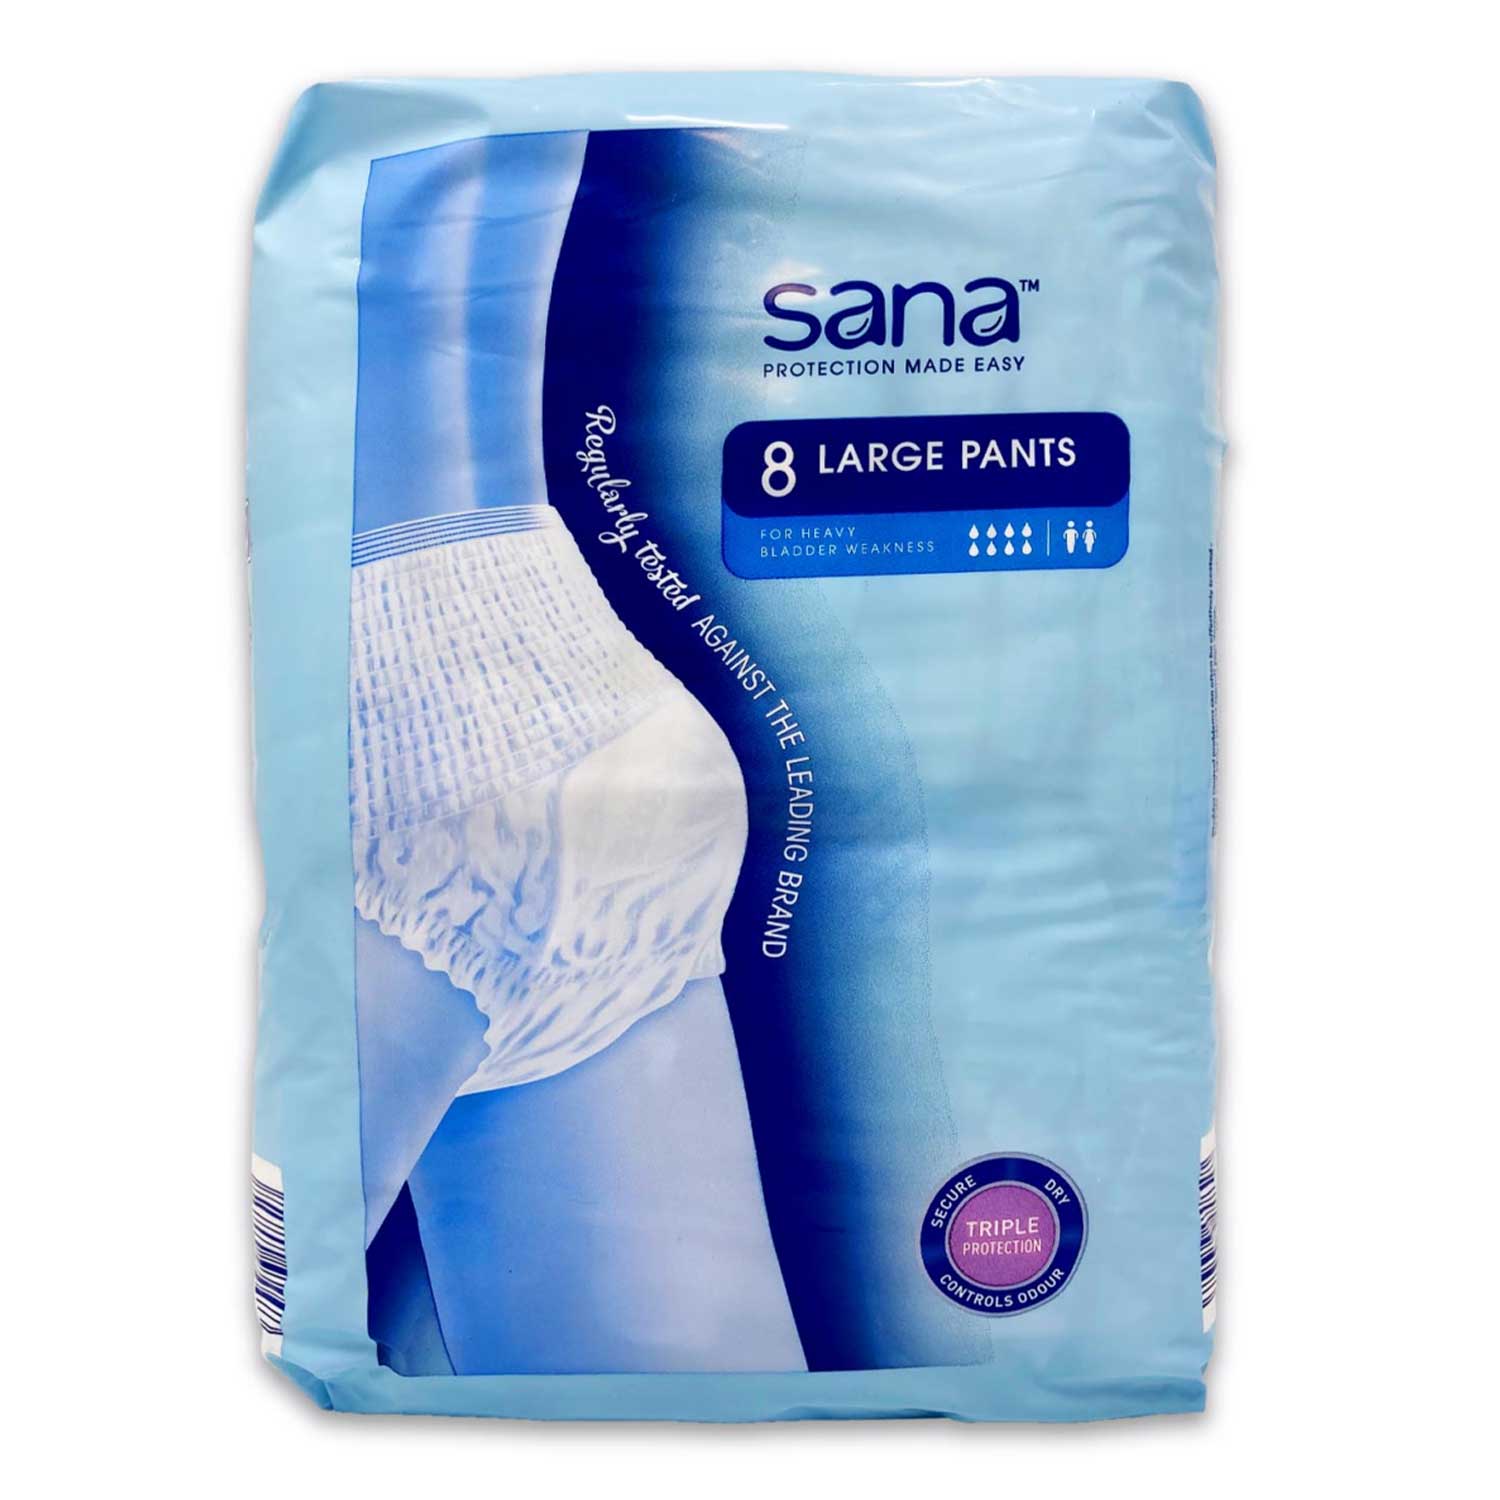 Aldi Sana Extra Plus Pads Review  Incontinence pad  CHOICE